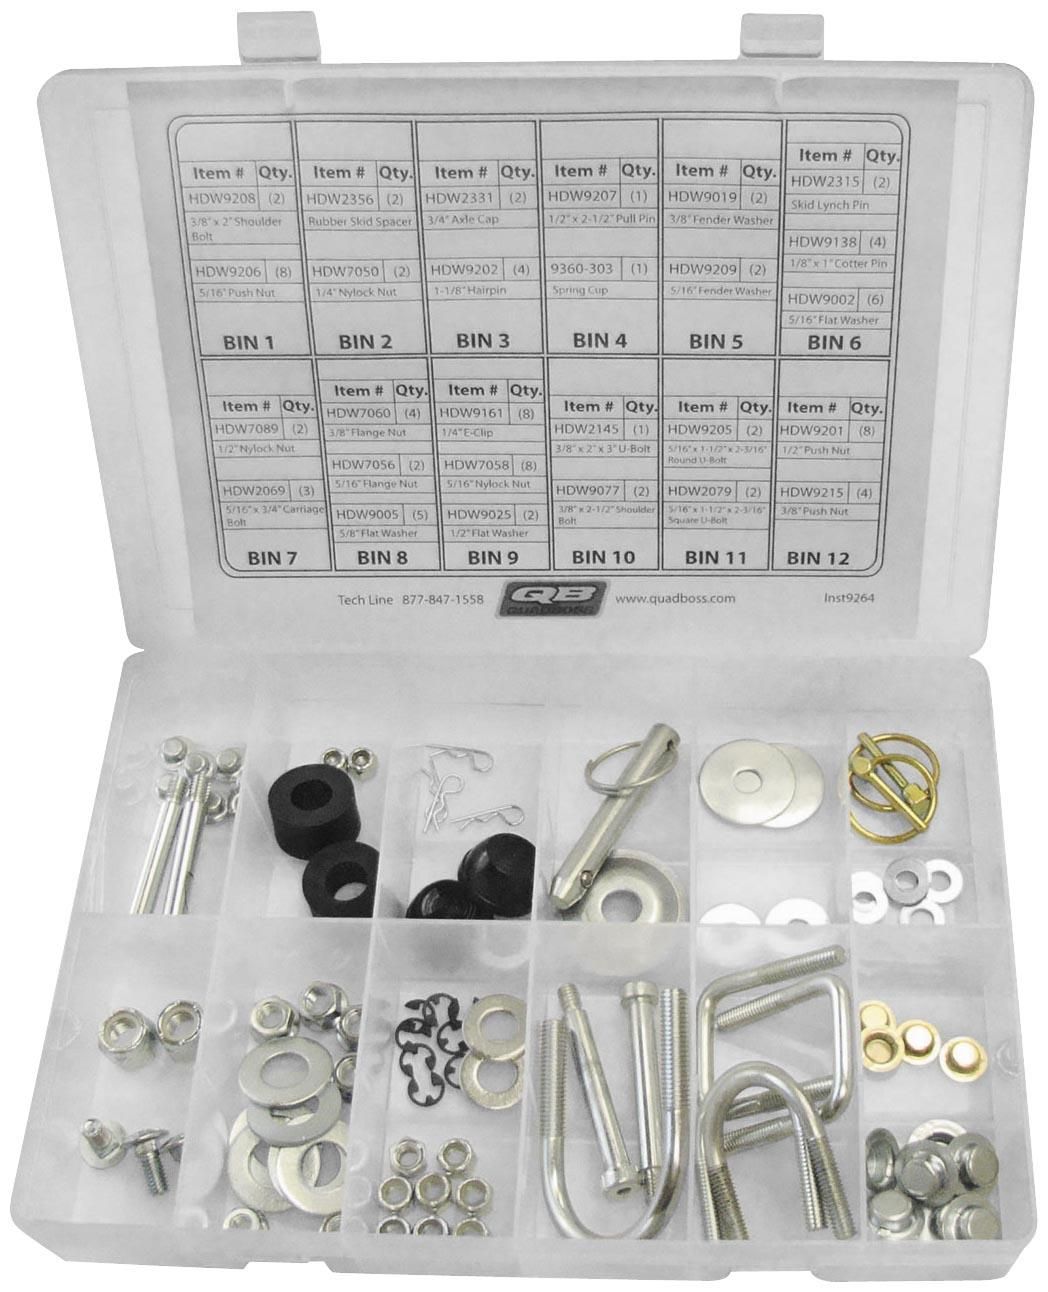 4P4Q-QUADBOSS-9264 Pile Driver Replacement Parts Assortment Kit